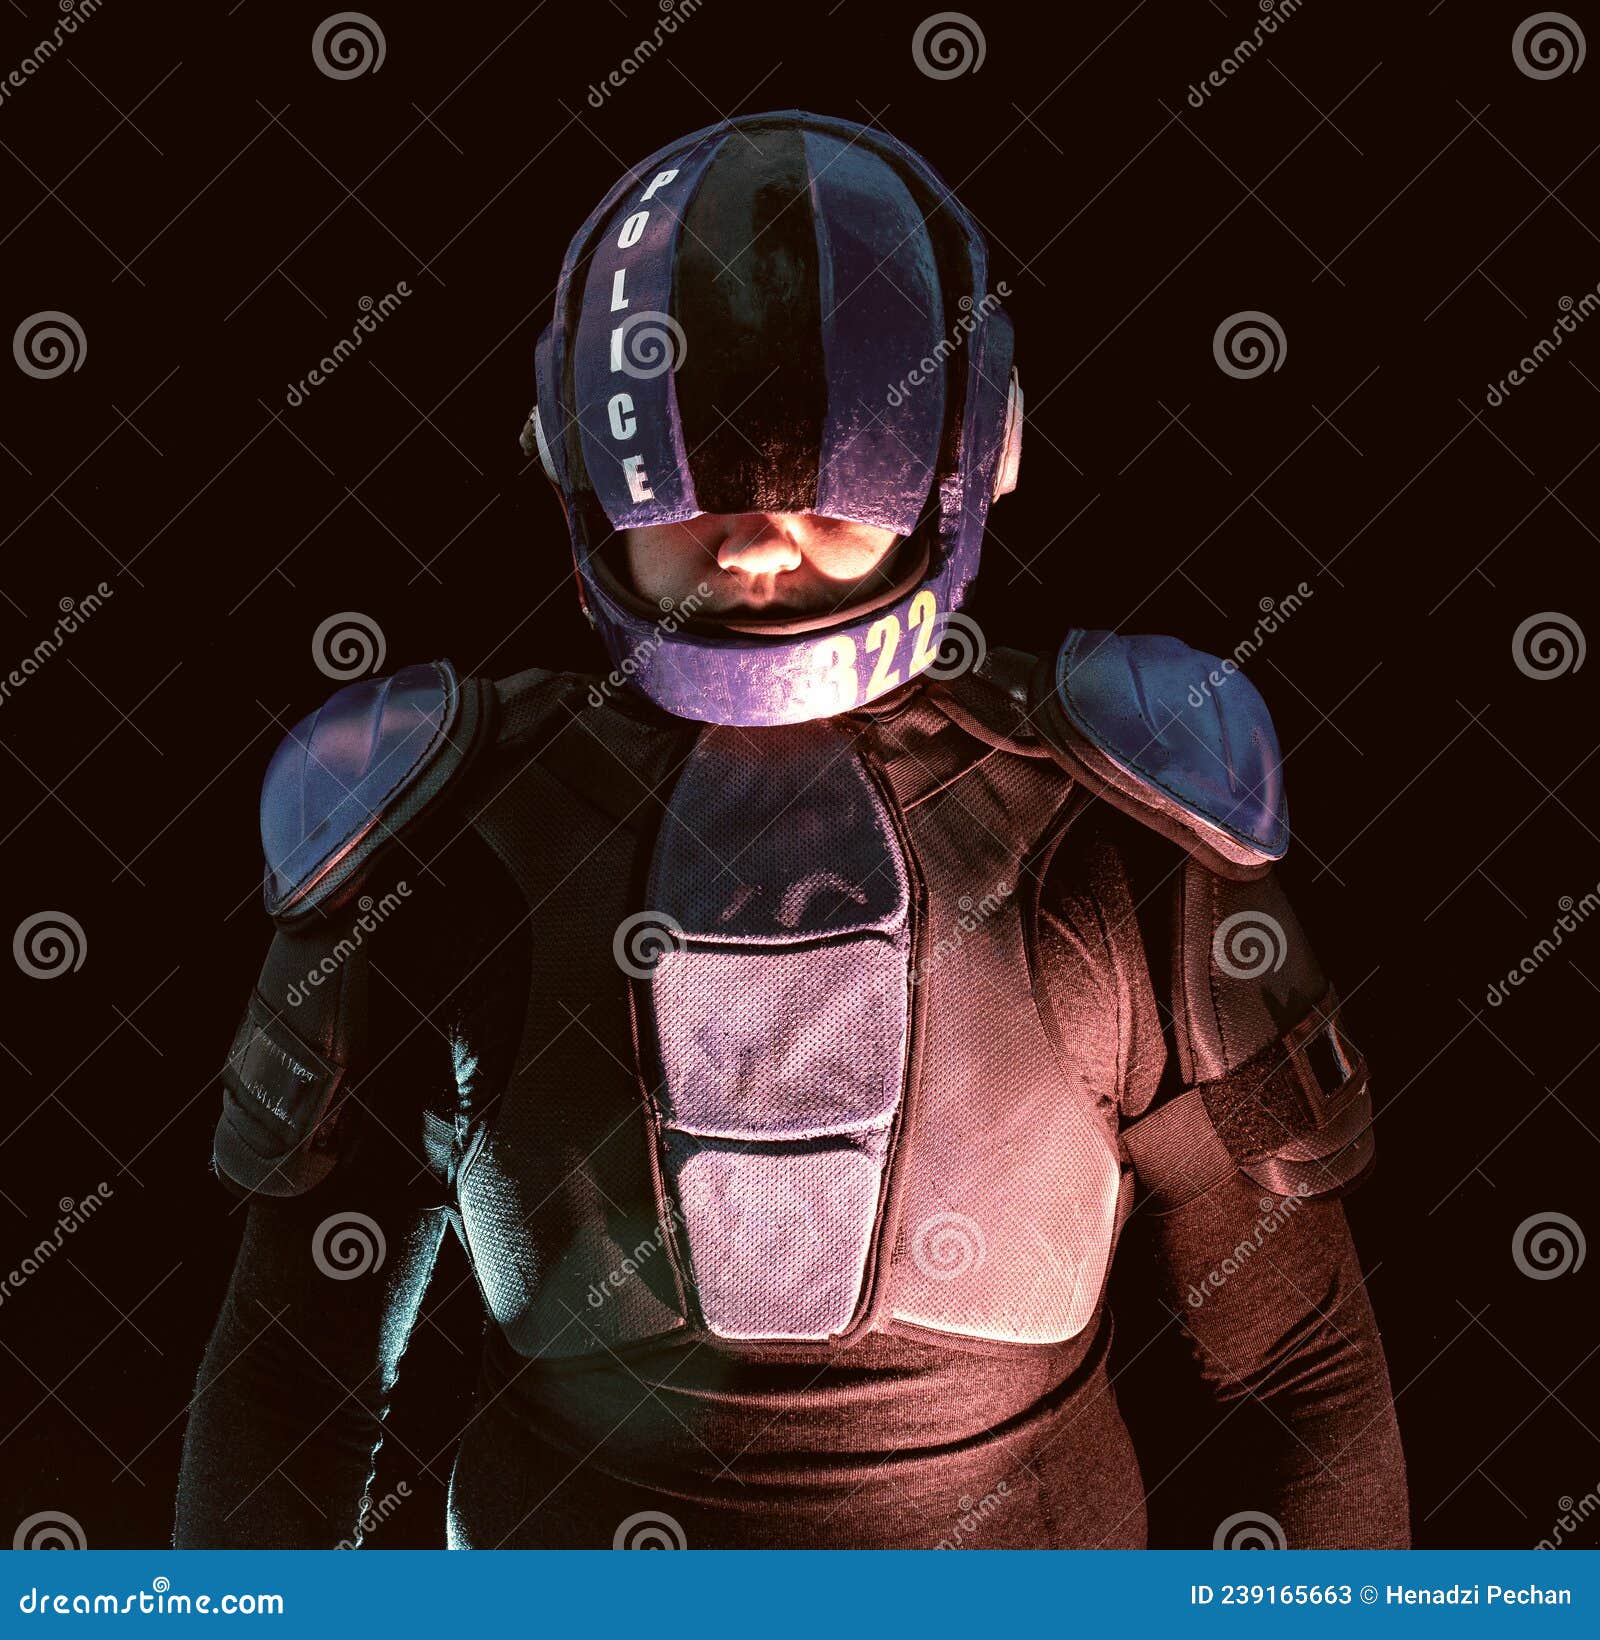 cyberpunk future concept. portrait of bionic cyborg police officer in dark. halfman robot looks at camera. futuristic science